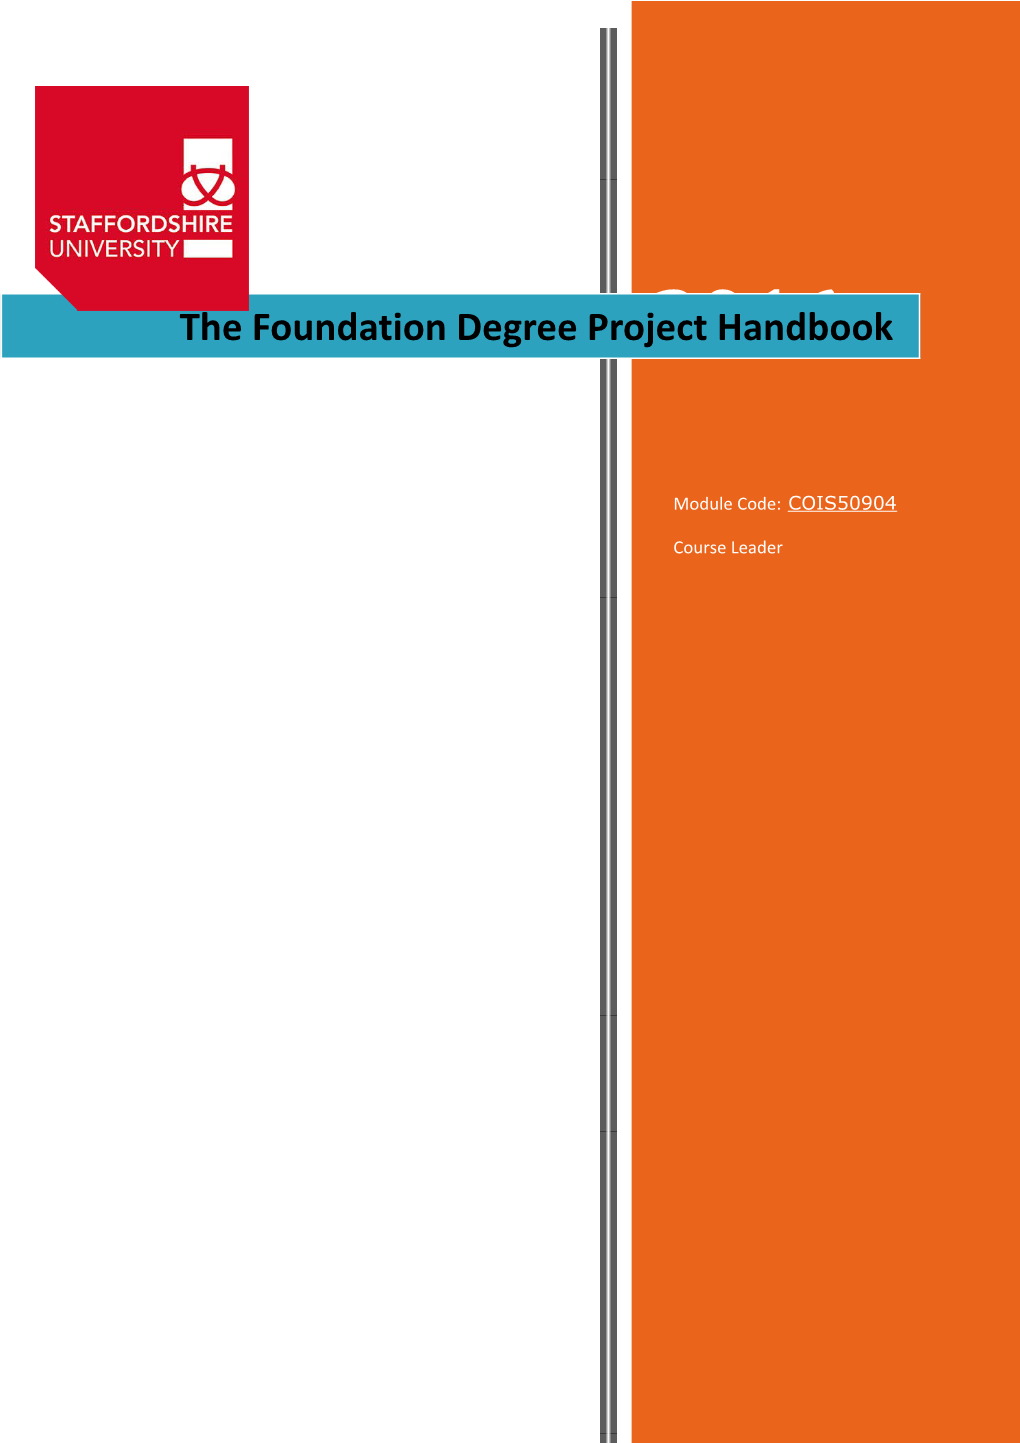 The Foundation Degree Project Handbook